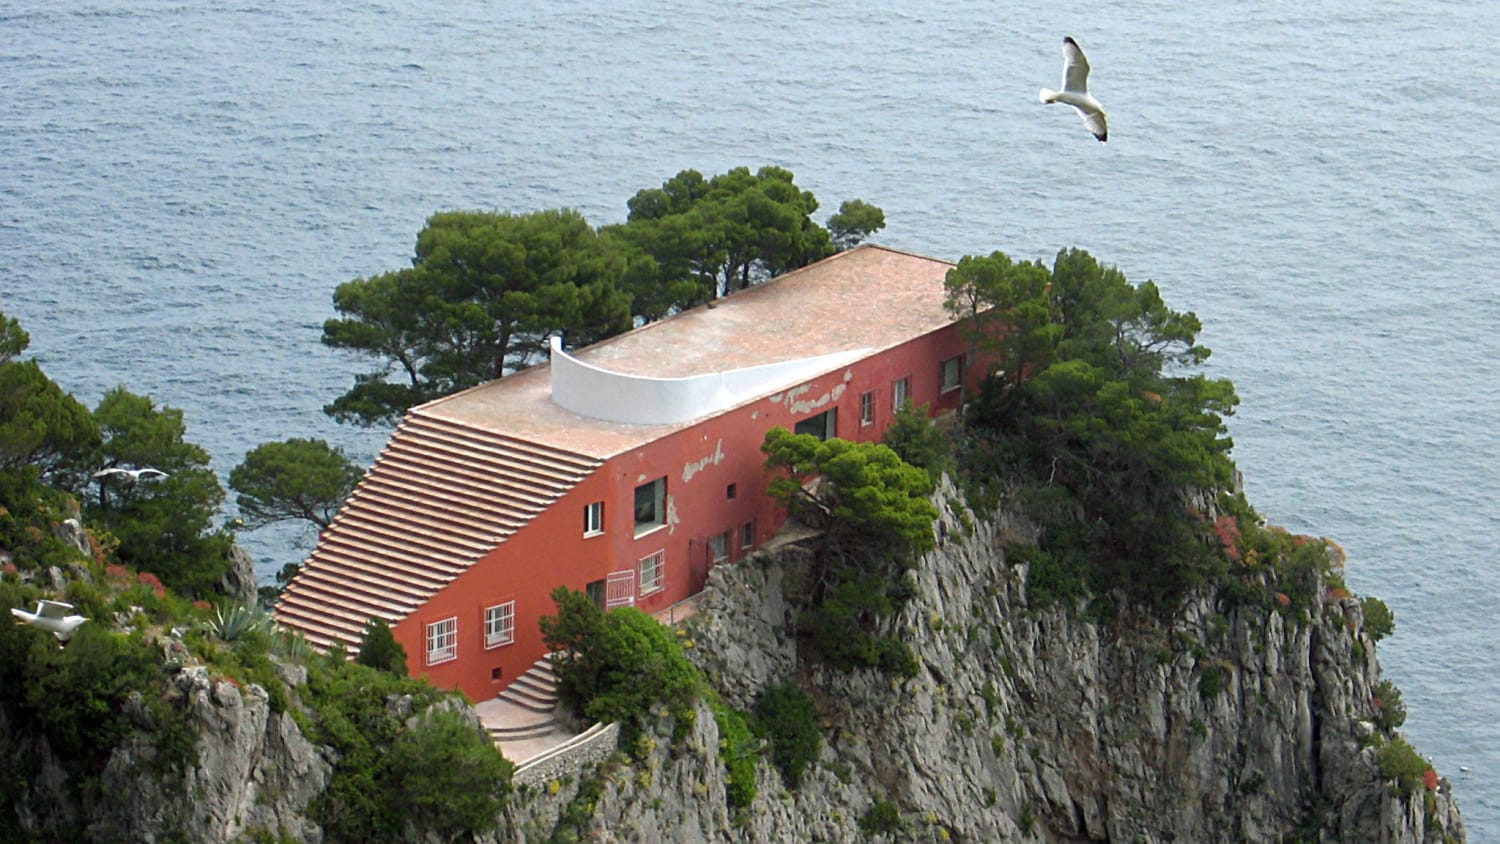 Modernism architecture: Casa Malaparte, 1938, by architect Adalberto Libera, was built on Capri island for Italian writer and film director Curzio Malaparte, who said he build "una casa come me" (a house like me).